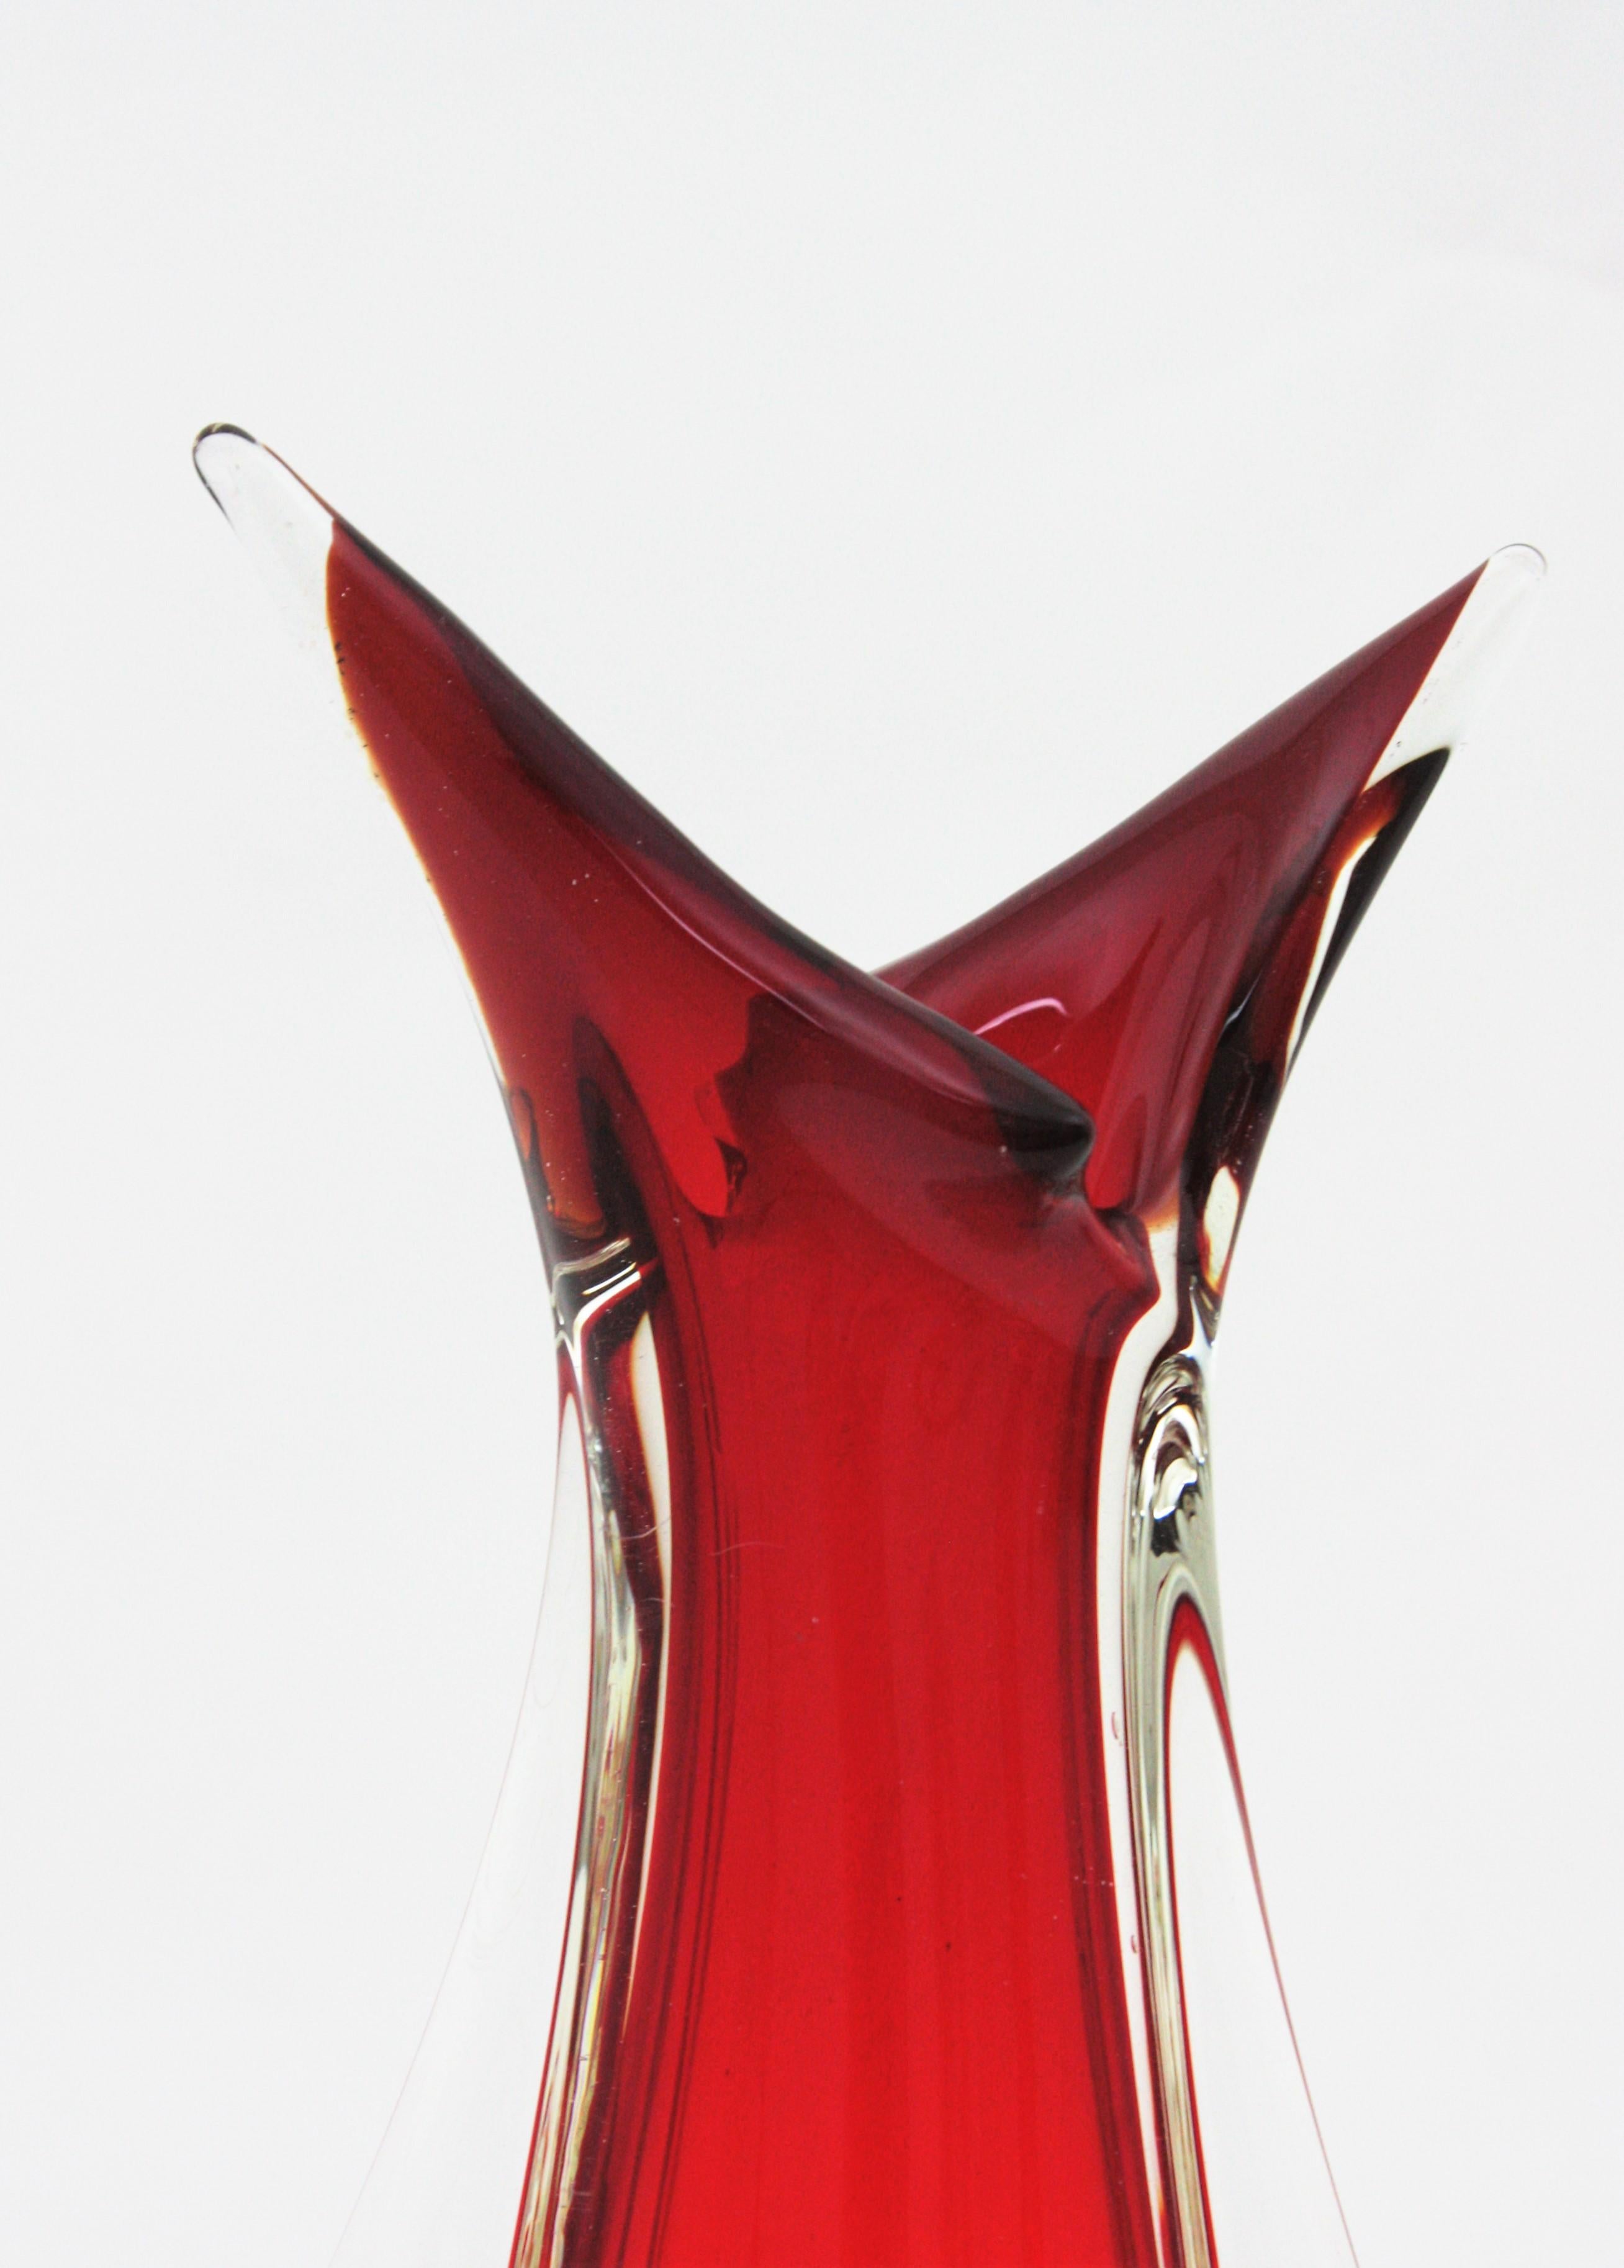 Flavio Poli Seguso Rot Orange Sommerso Murano Kunstglas Vase (20. Jahrhundert) im Angebot